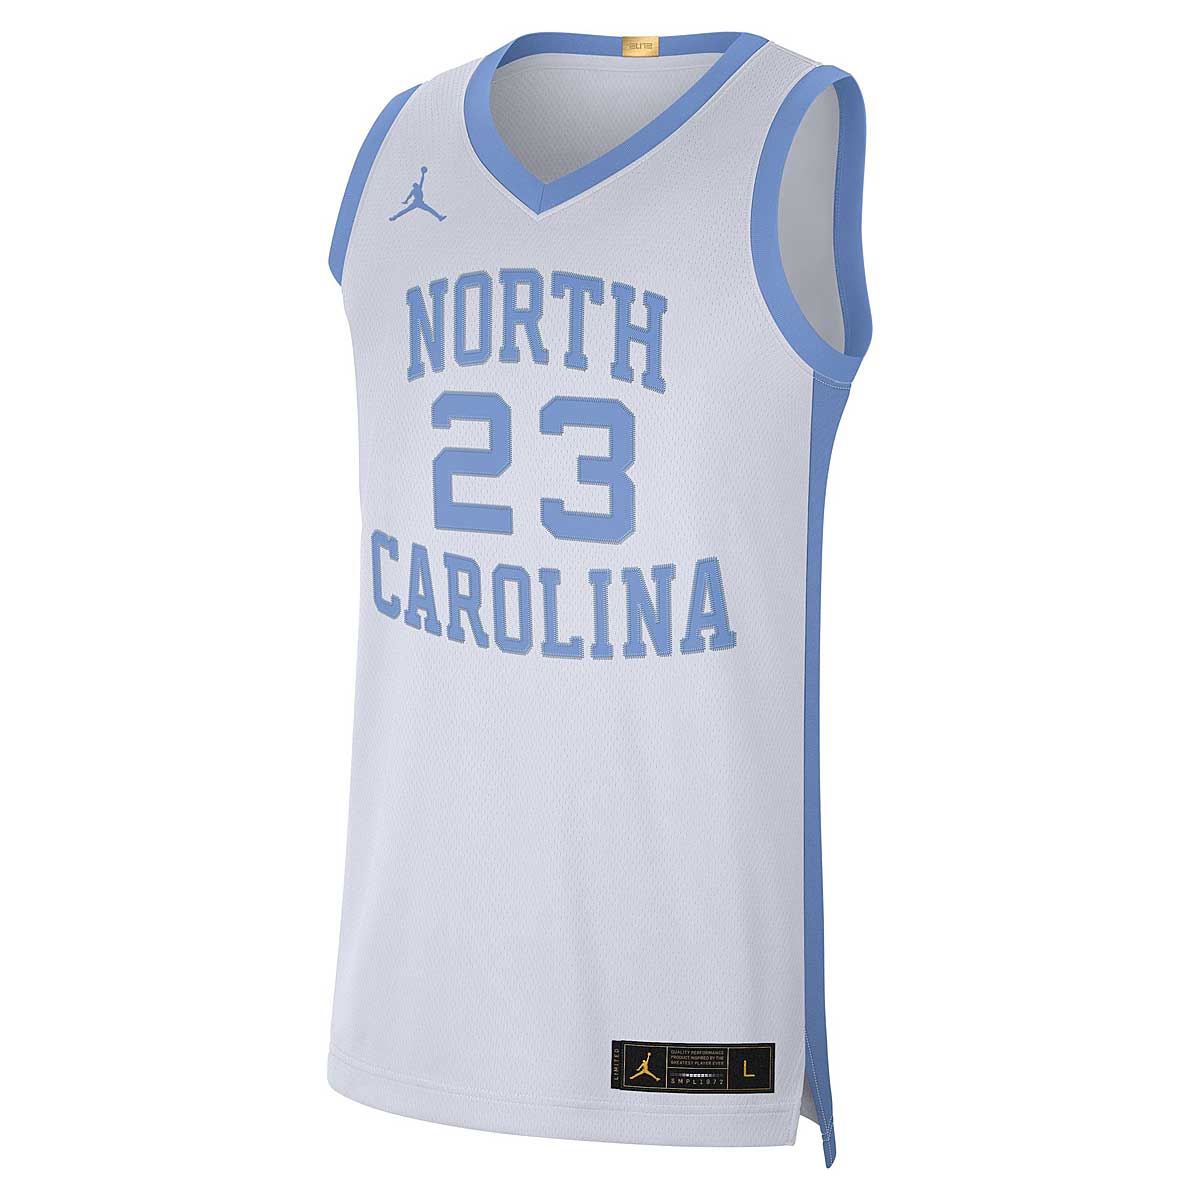 Jordan Ncaa North Carolina Tarheels Retro Limited Edition Jersey Michael Jordan, White/valor Blue/valor Blue S